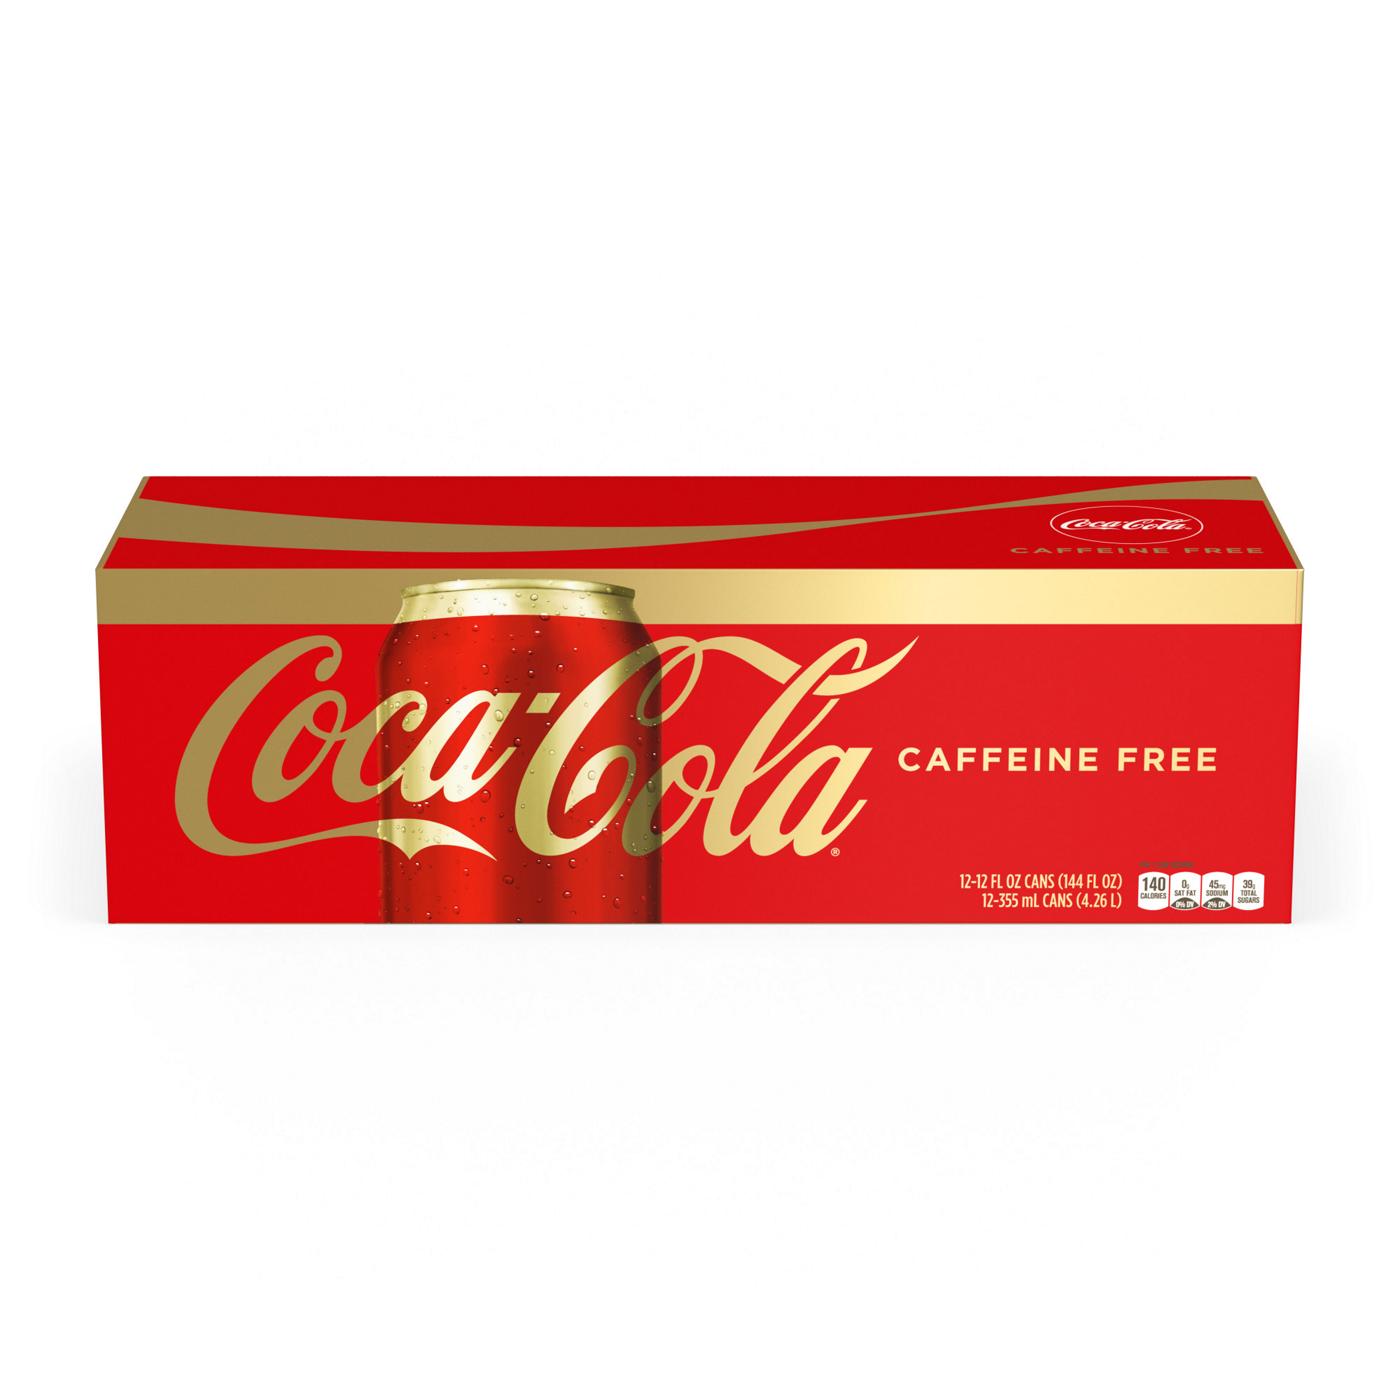 Coca-Cola Caffeine Free Classic Coke 12 oz Cans; image 1 of 3